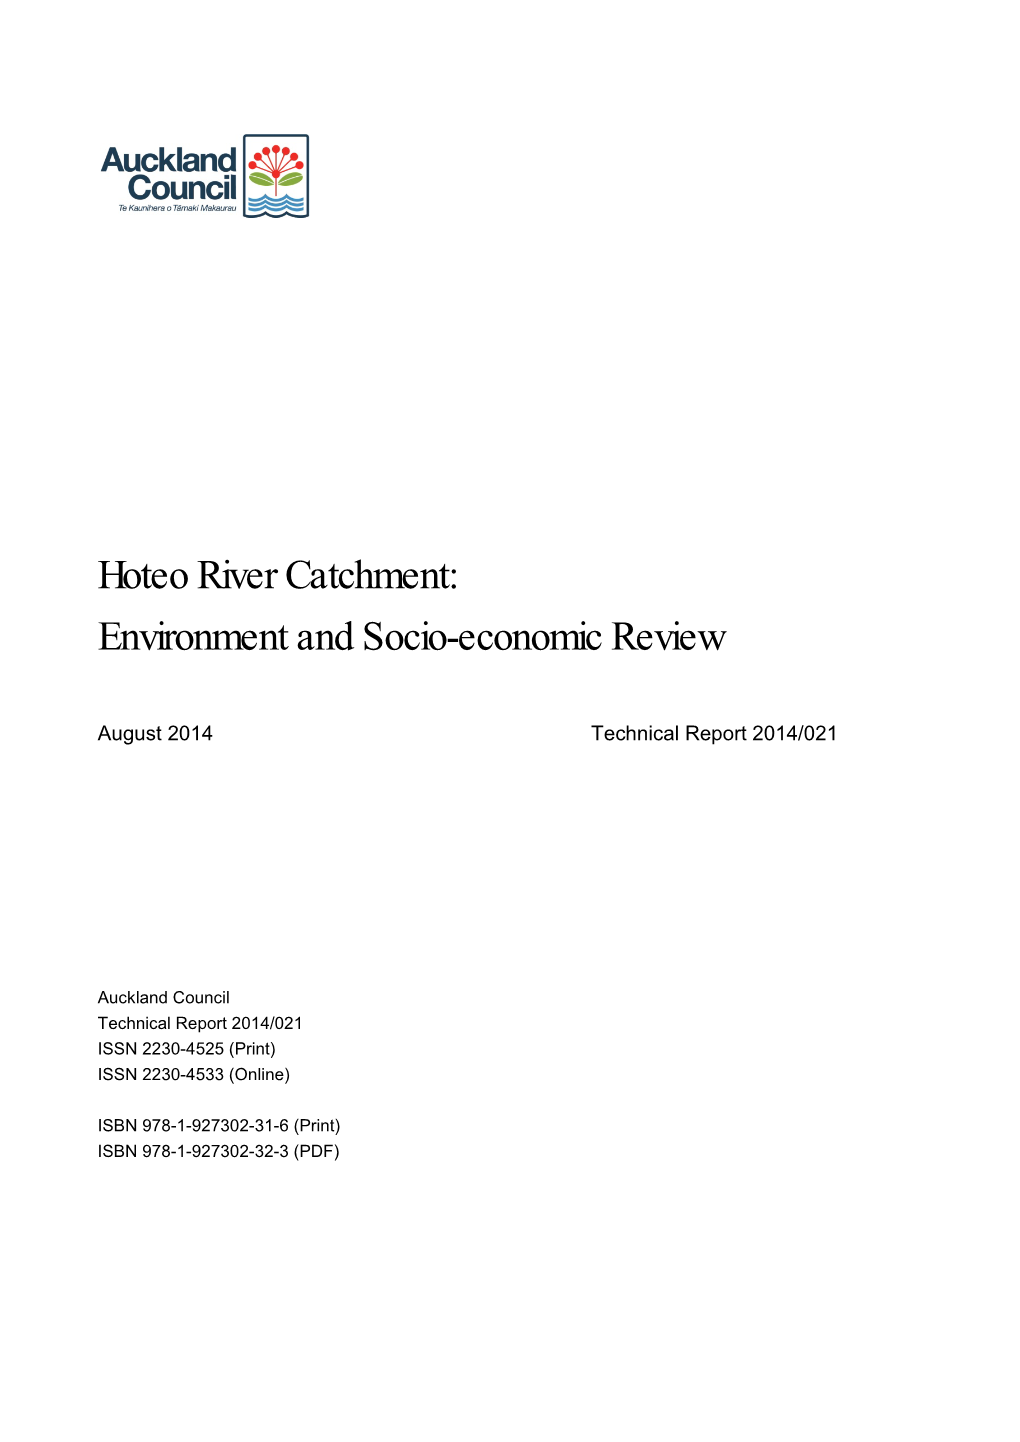 Hoteo River Catchment: Environment and Socio-Economic Review